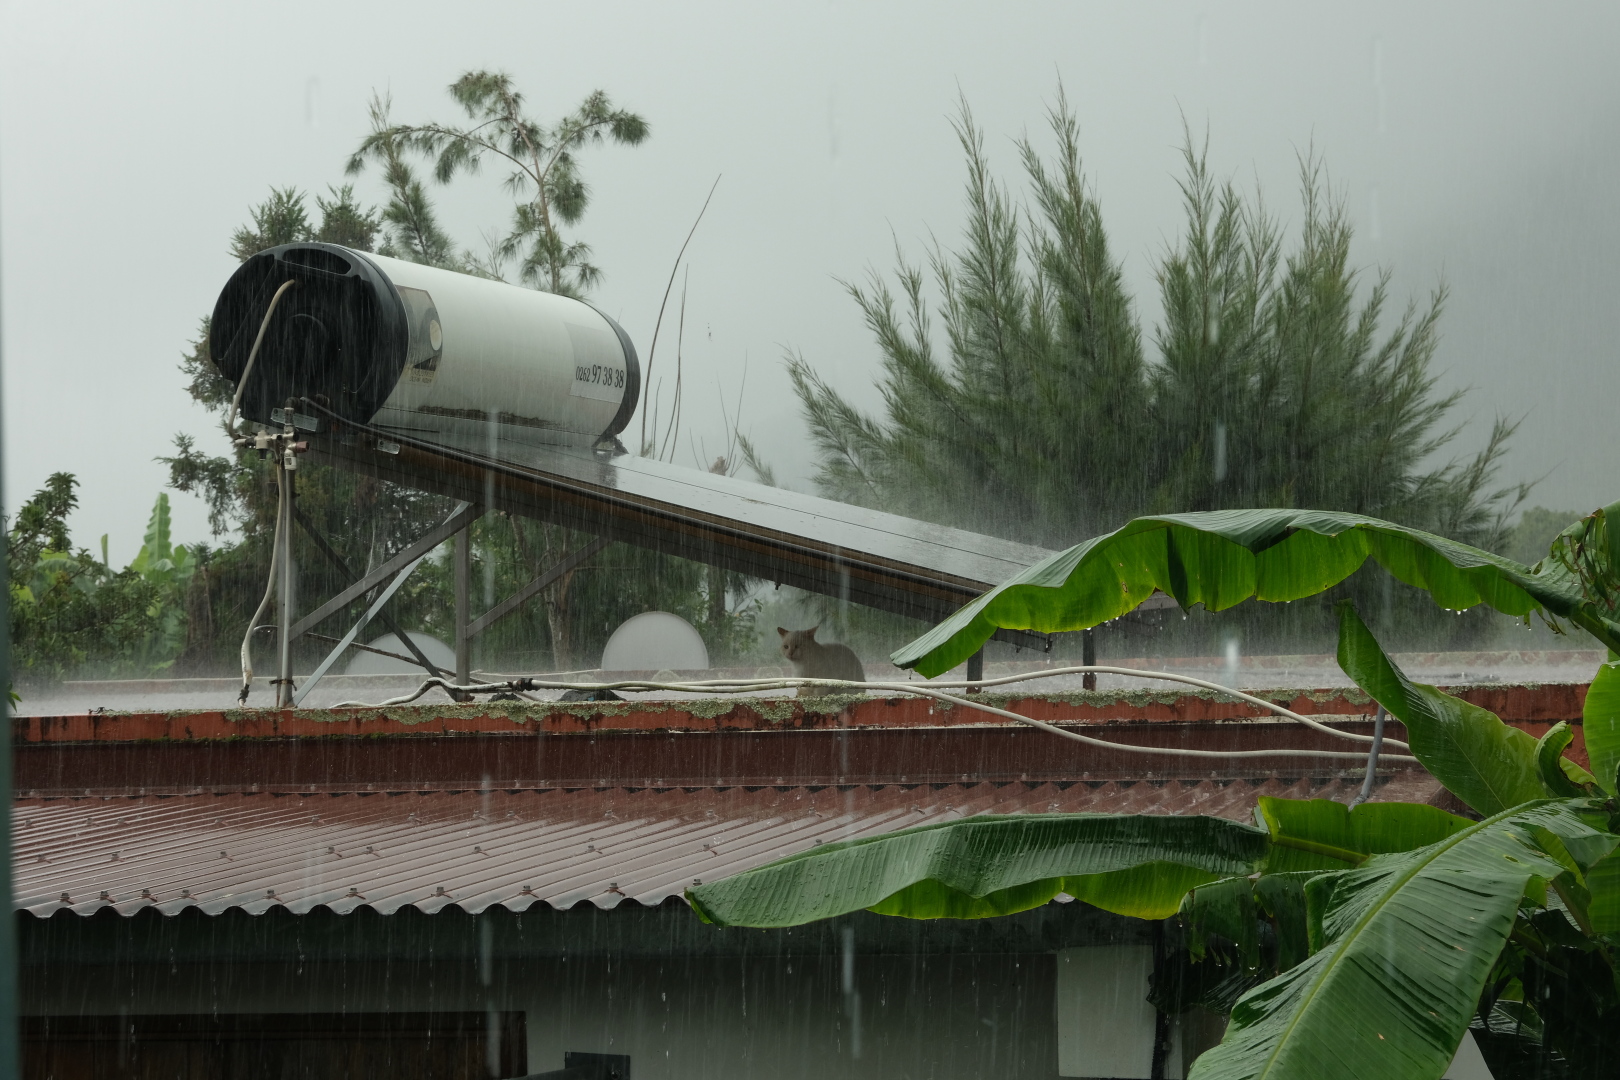 Das Wetter bei unserer Ankunft in Las Thuyas, Cilaos. Katzenwetter eben!